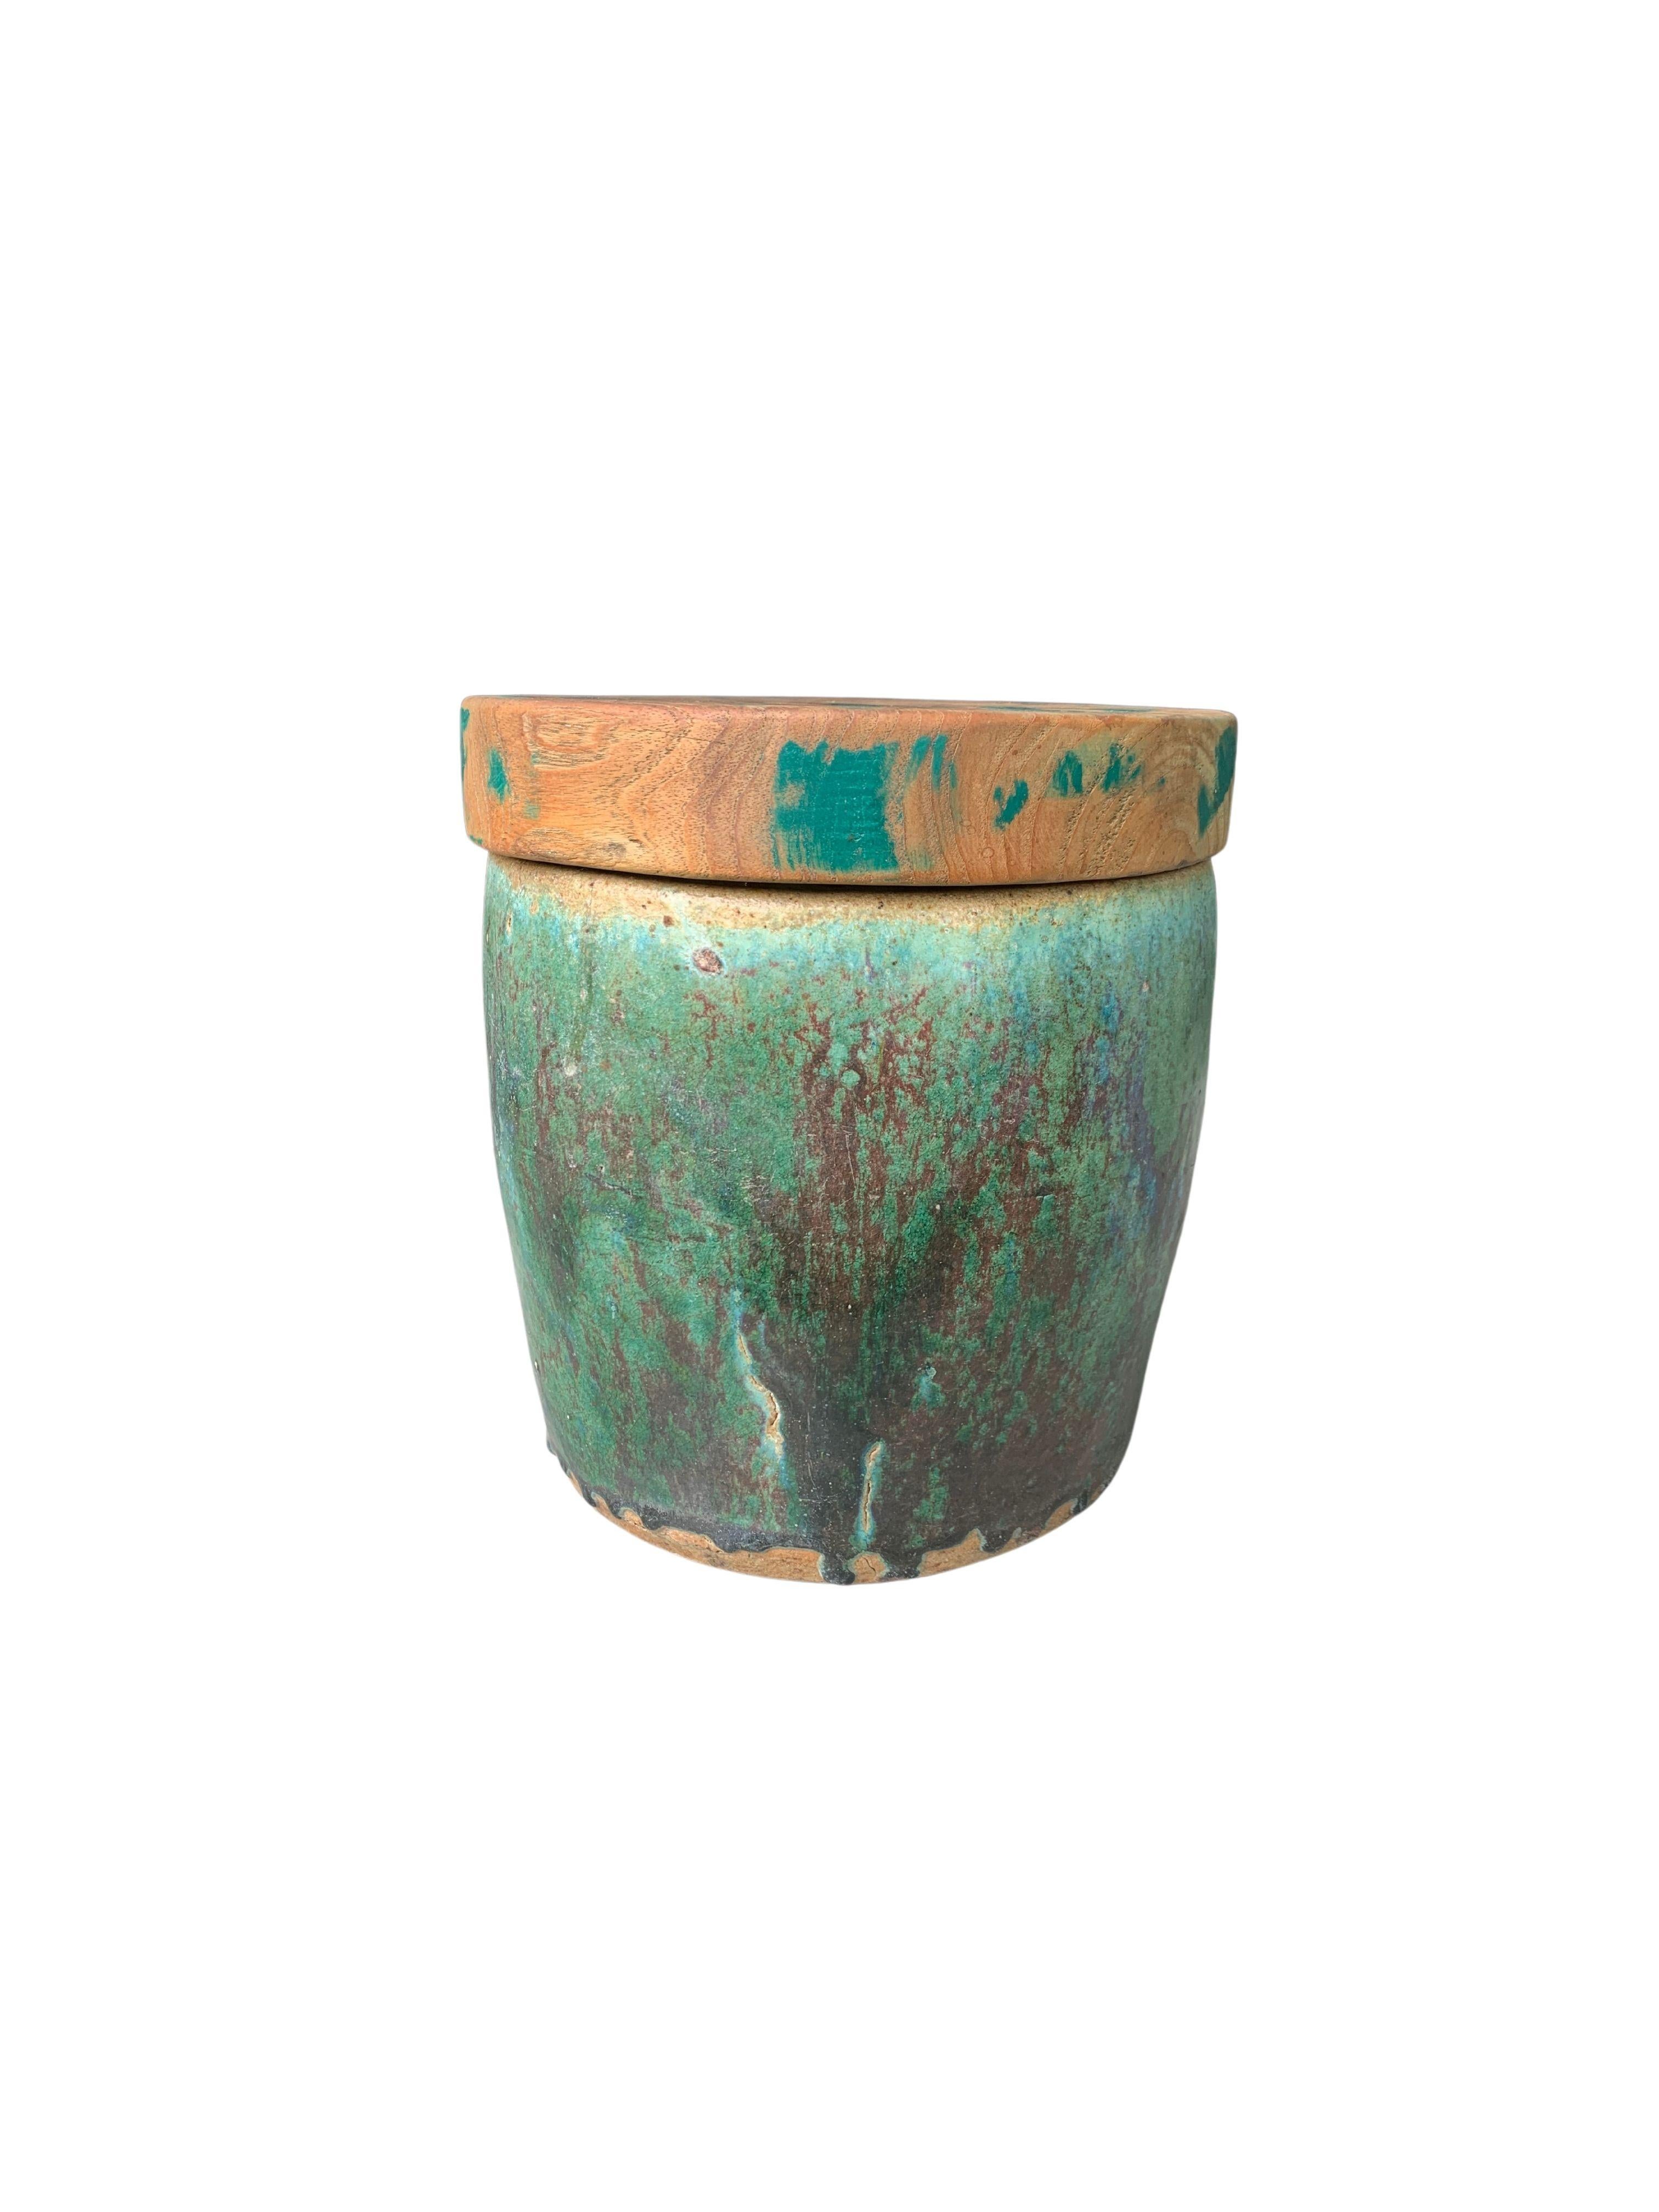 20th Century Chinese Shiwan Green Glazed Ceramic Jar / Planter, c. 1900 For Sale